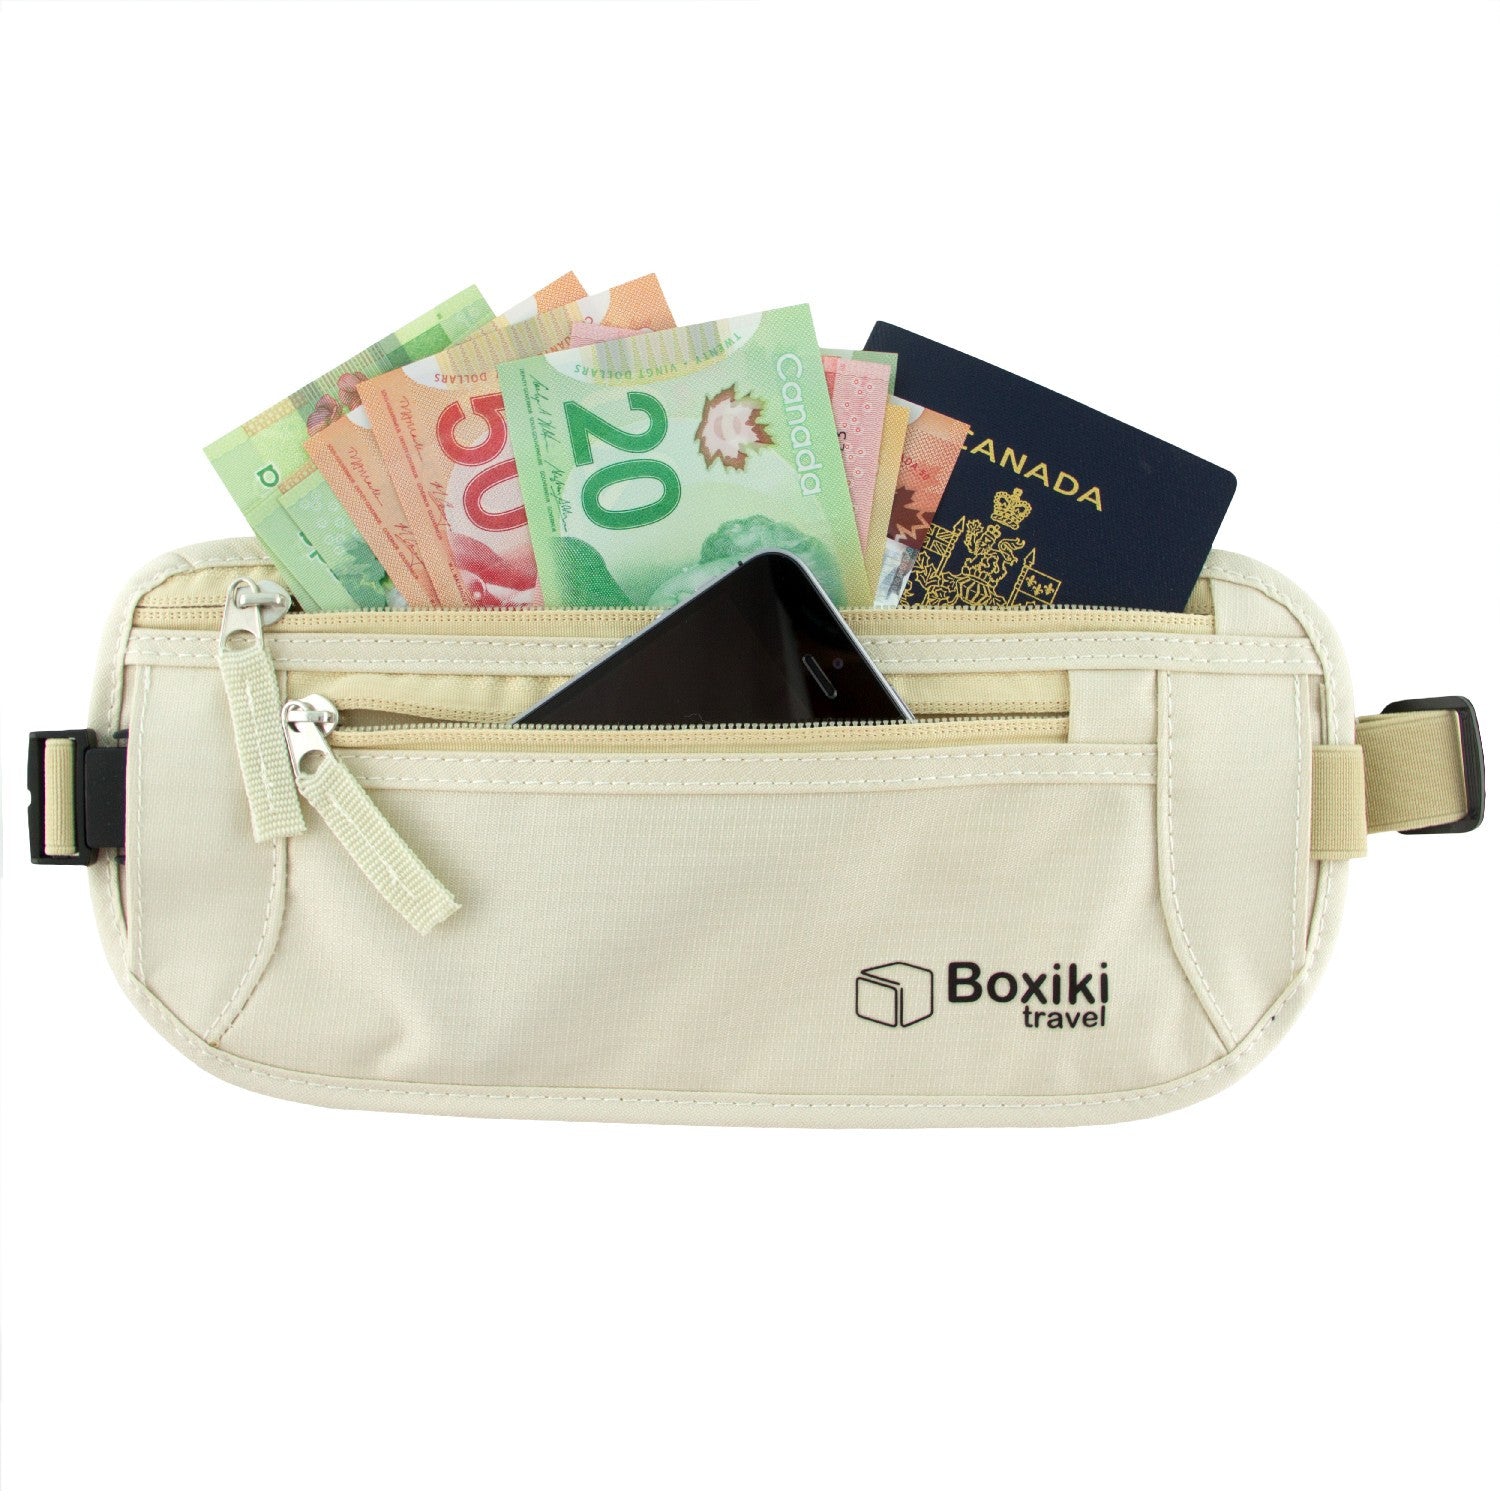 Boxiki Travel Money Belt - Rfid Blocking Money Belt 